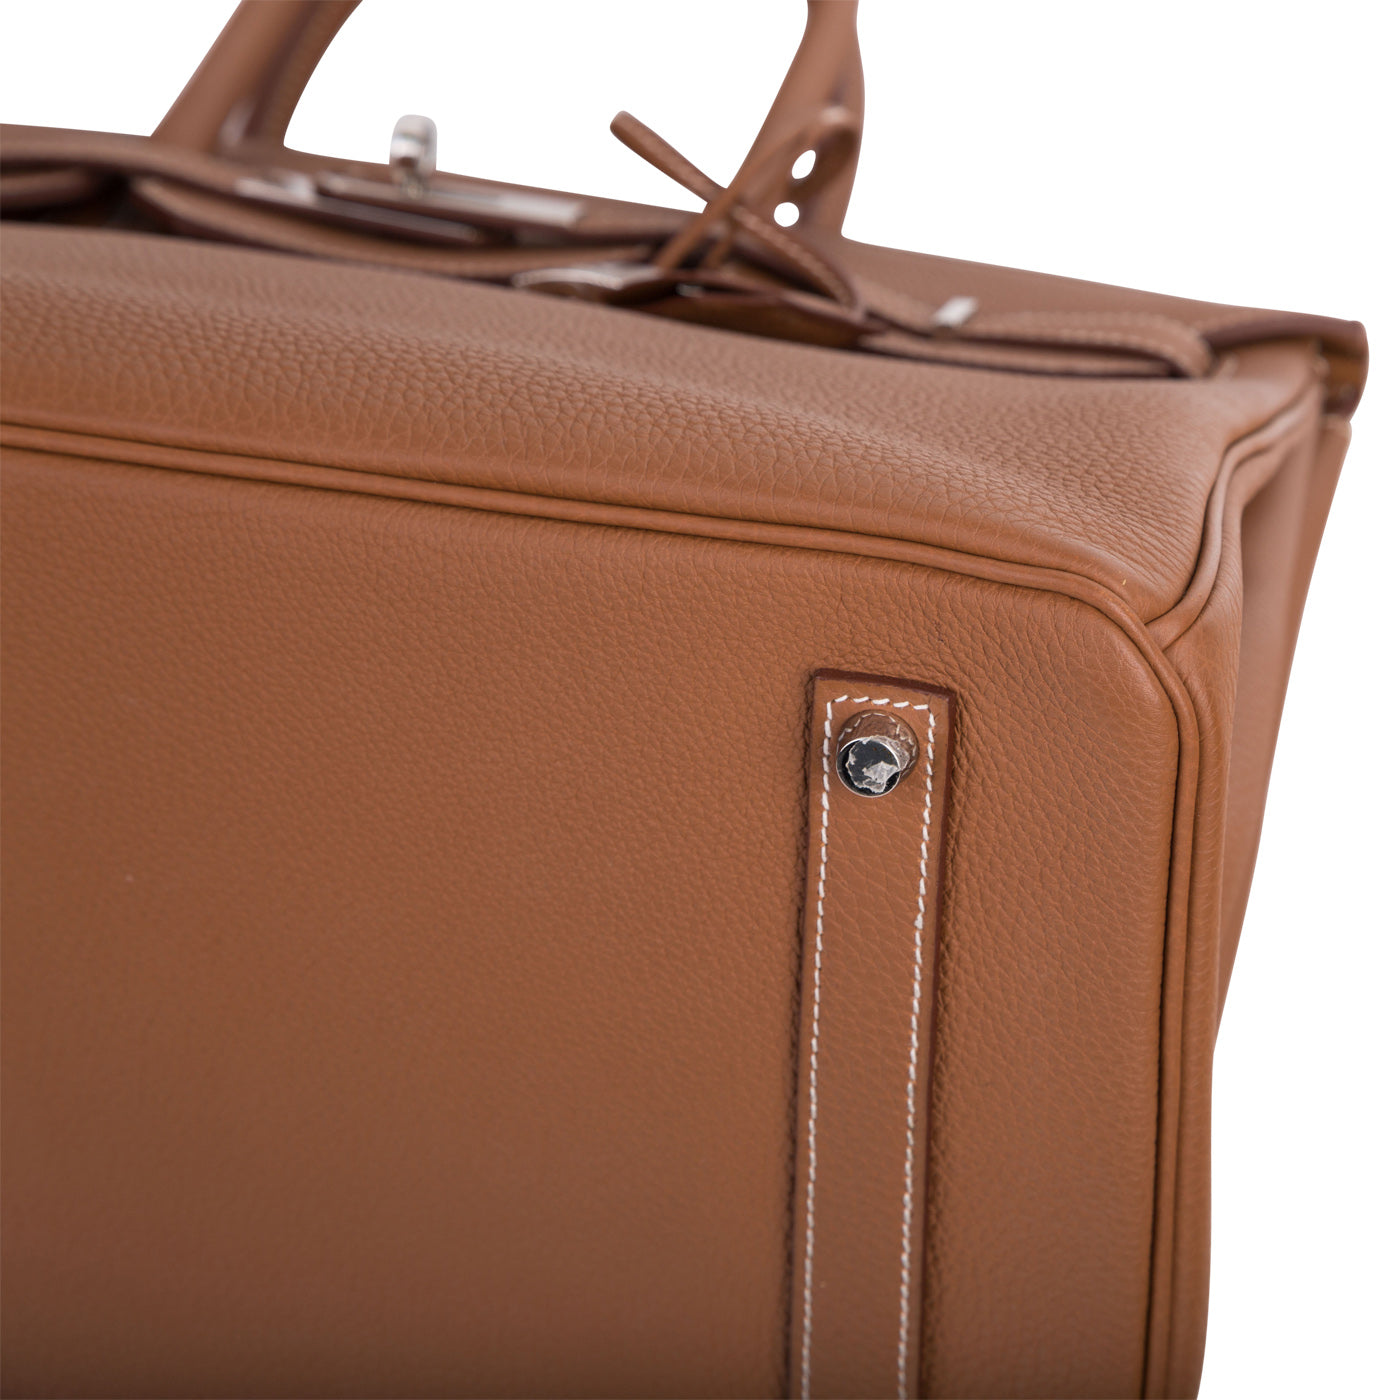 HB52004 Hermes Premium Collection 35cm Birkin Togo Leather-Brown